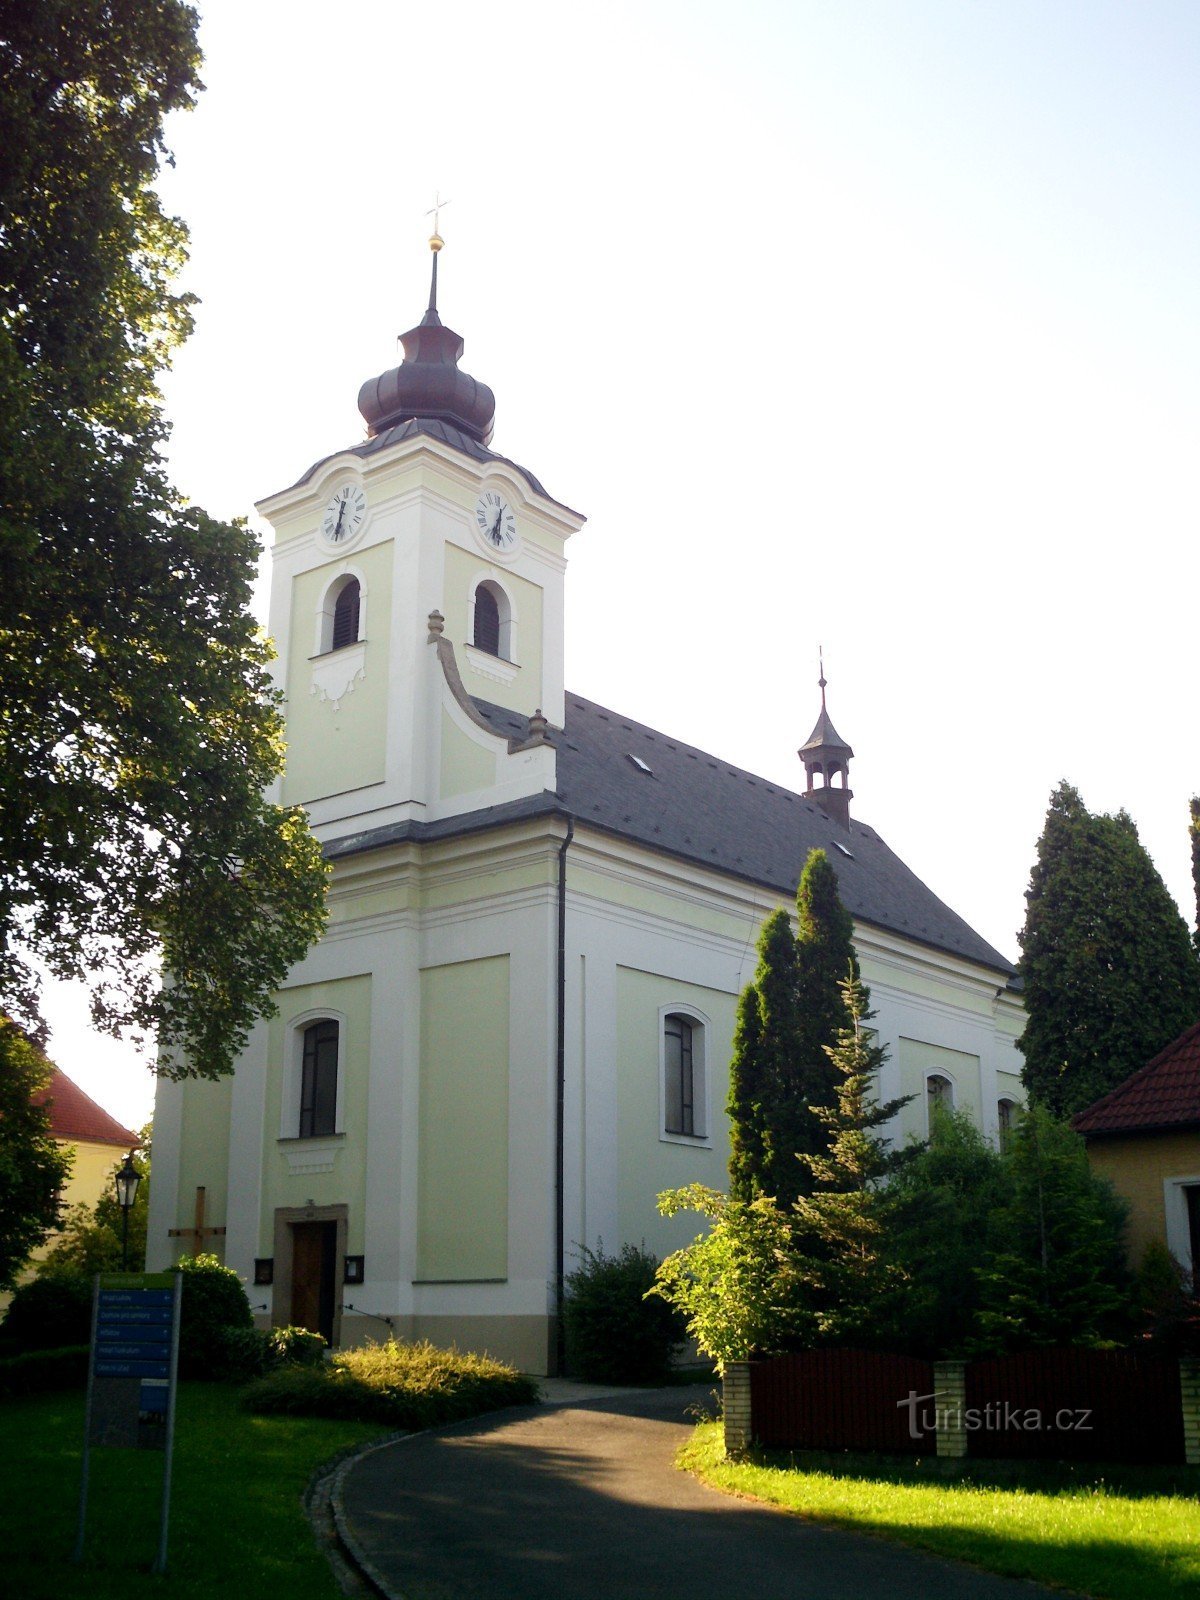 church of st. Joseph from 1810